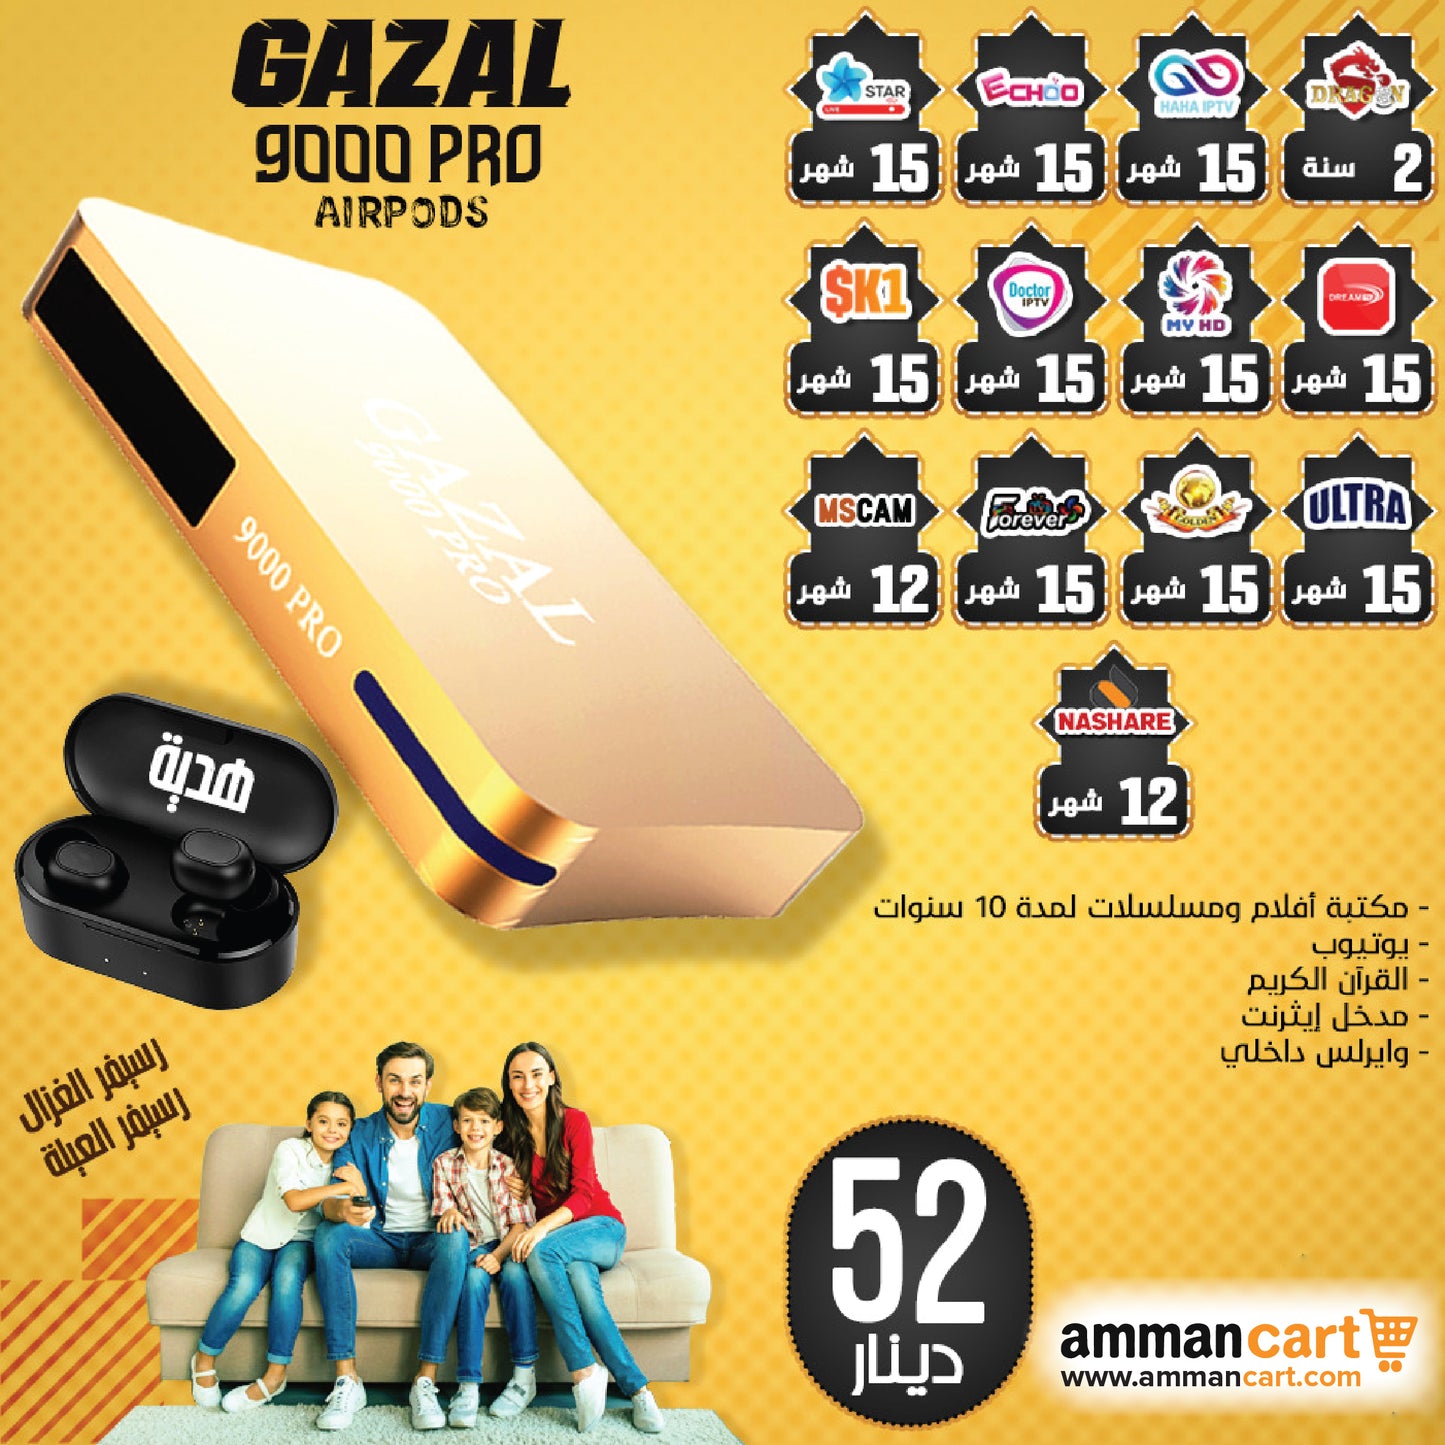 Gazal 9000 Pro Receive